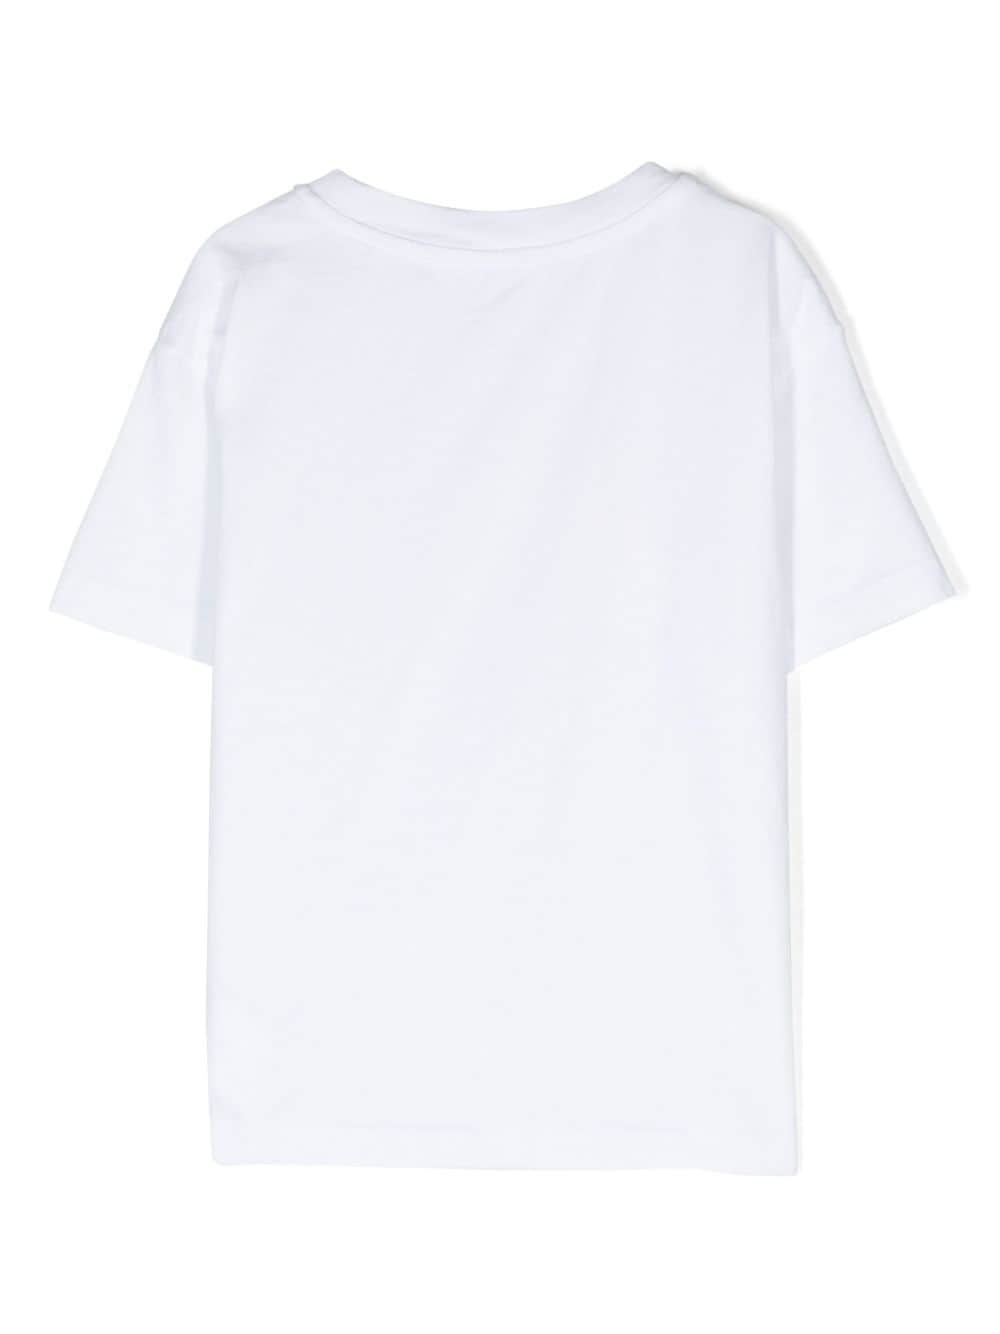 White Teddy bear motif T-shirt